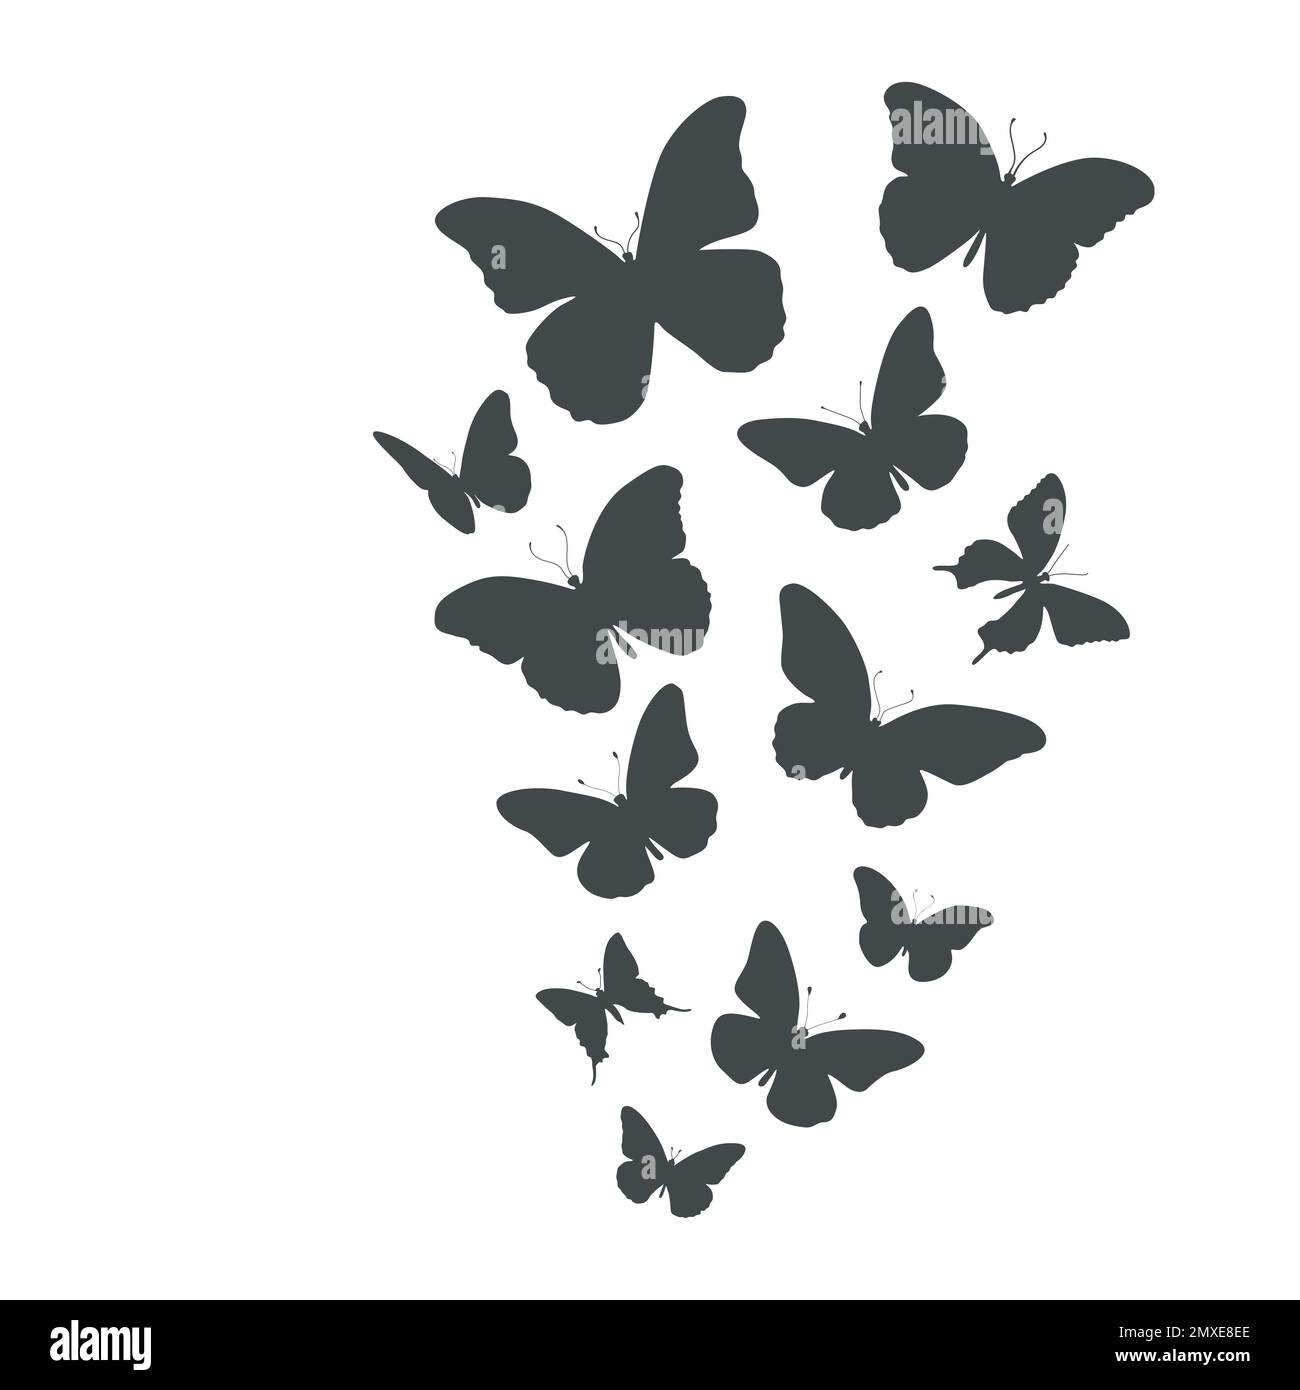 https://c8.alamy.com/comp/2MXE8EE/flying-butterfly-silhouettes-butterflies-silhouette-set-2MXE8EE.jpg